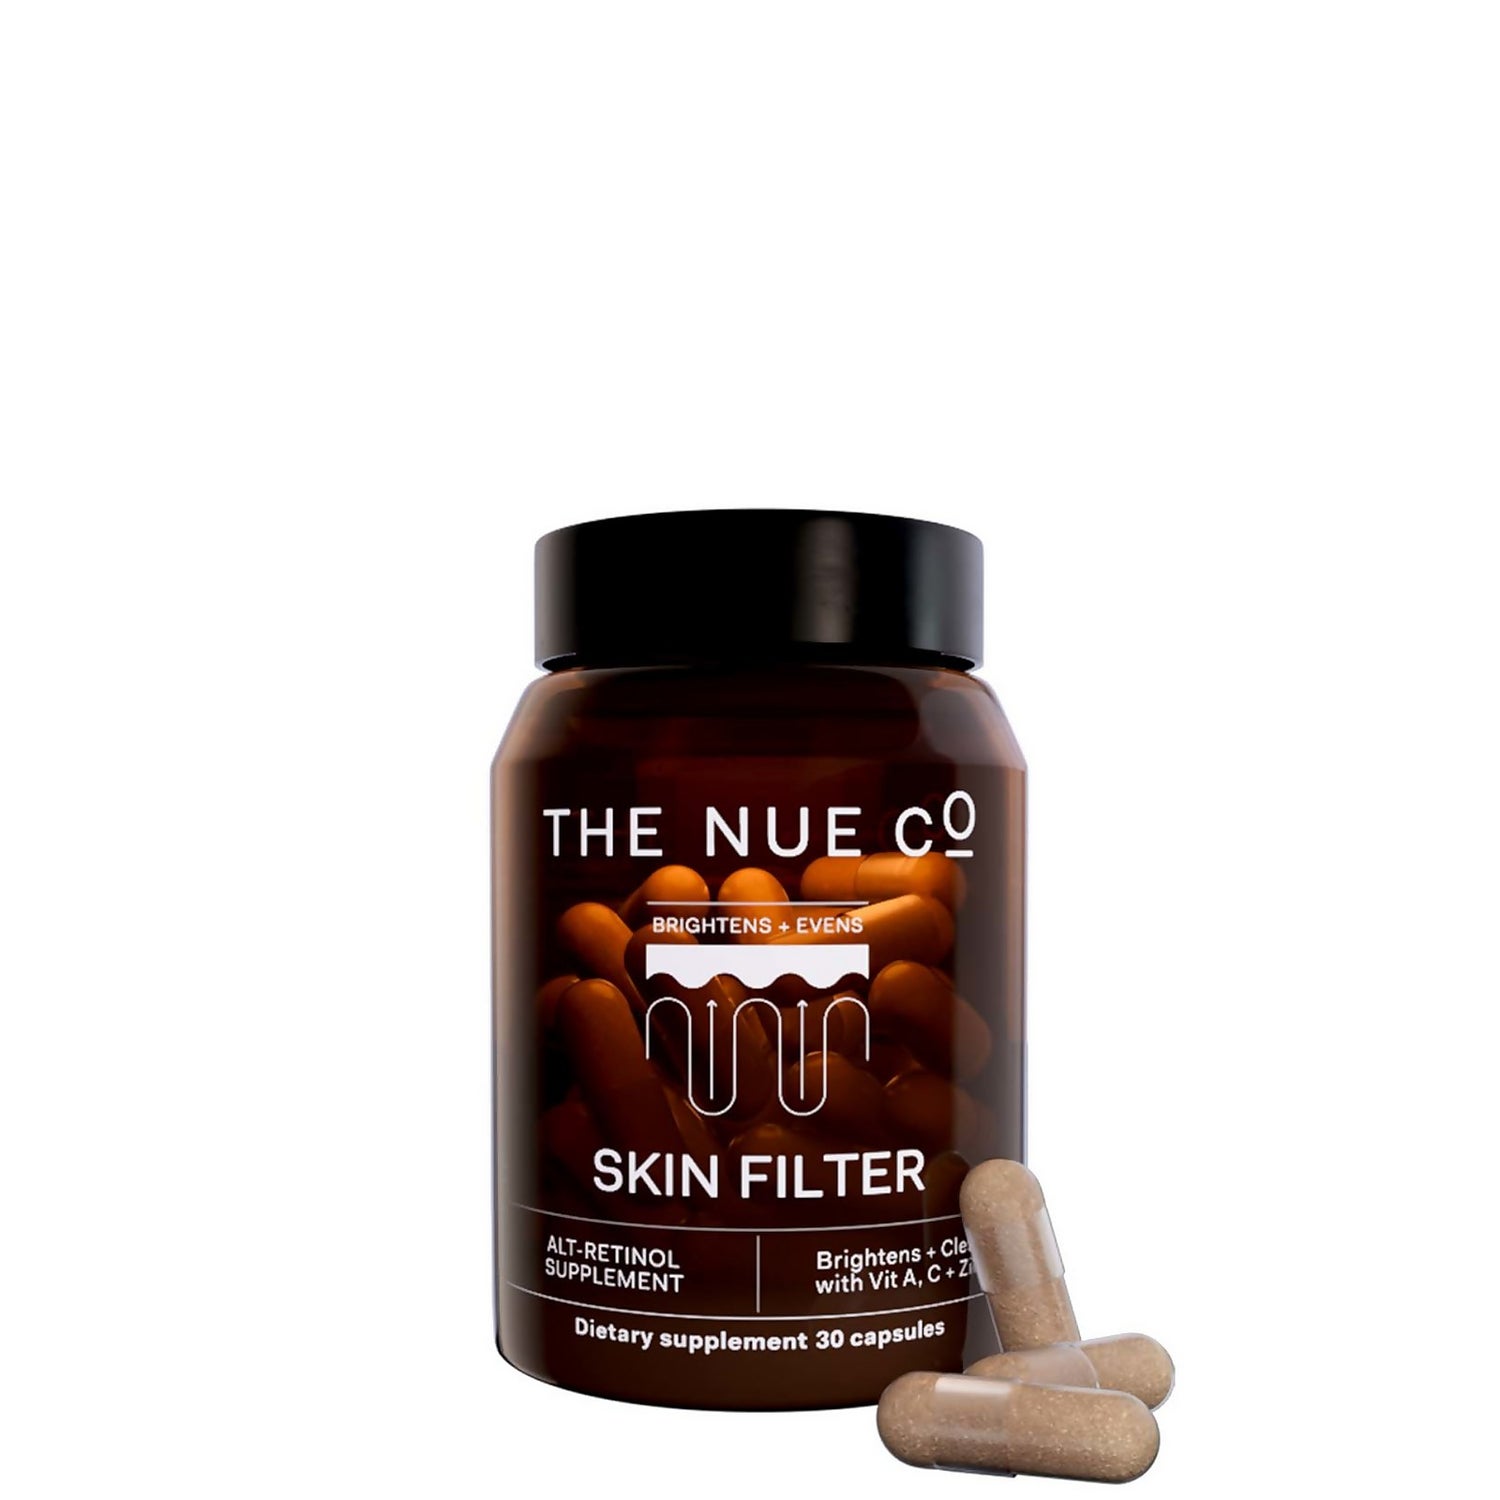 The Nue Co. Skin Filter Capsules - 30 Capsules